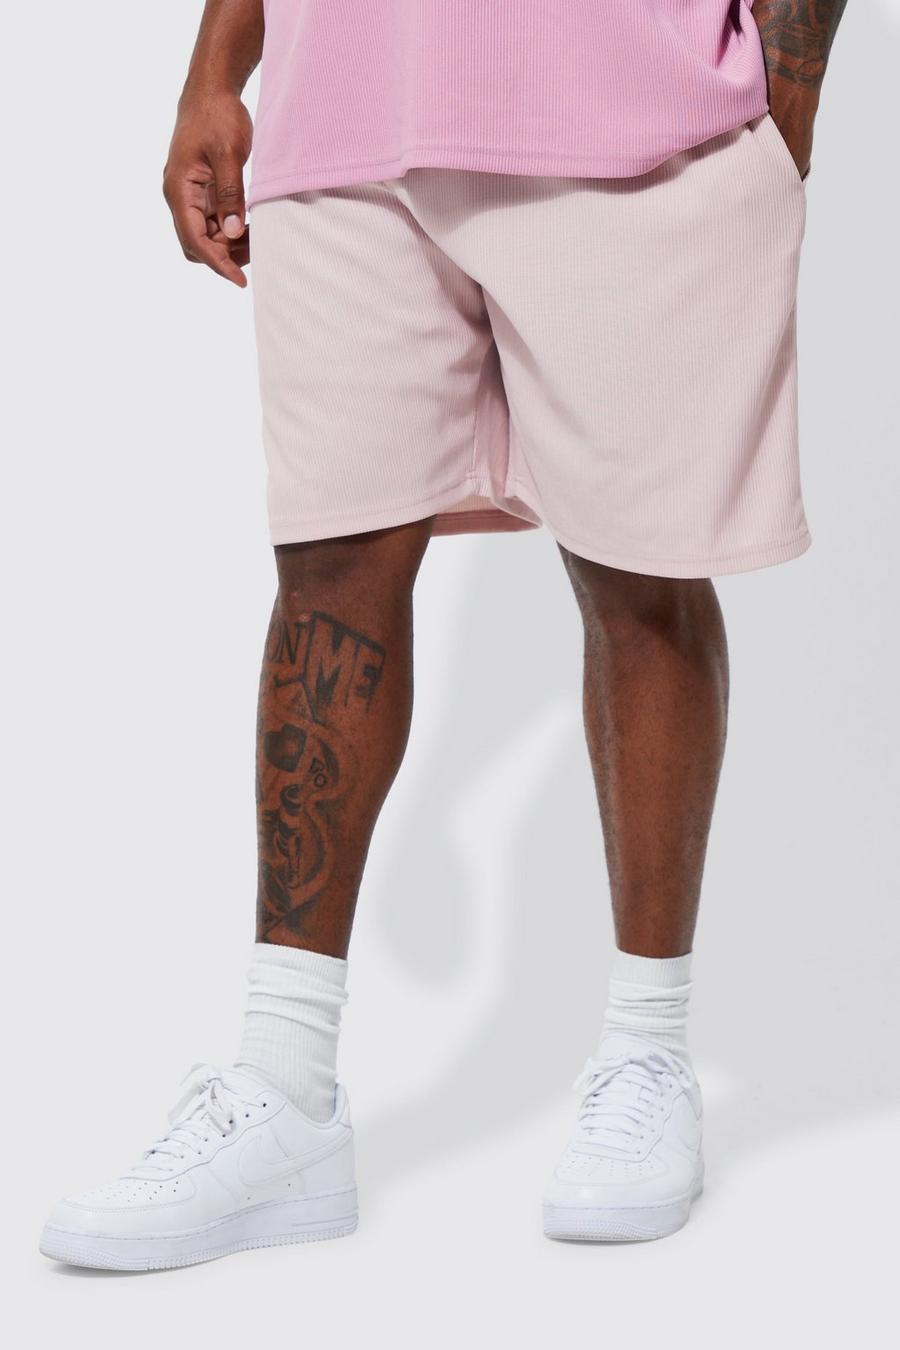 Pantalón corto Plus holgado de canalé otomano de largo medio, Light pink rosa